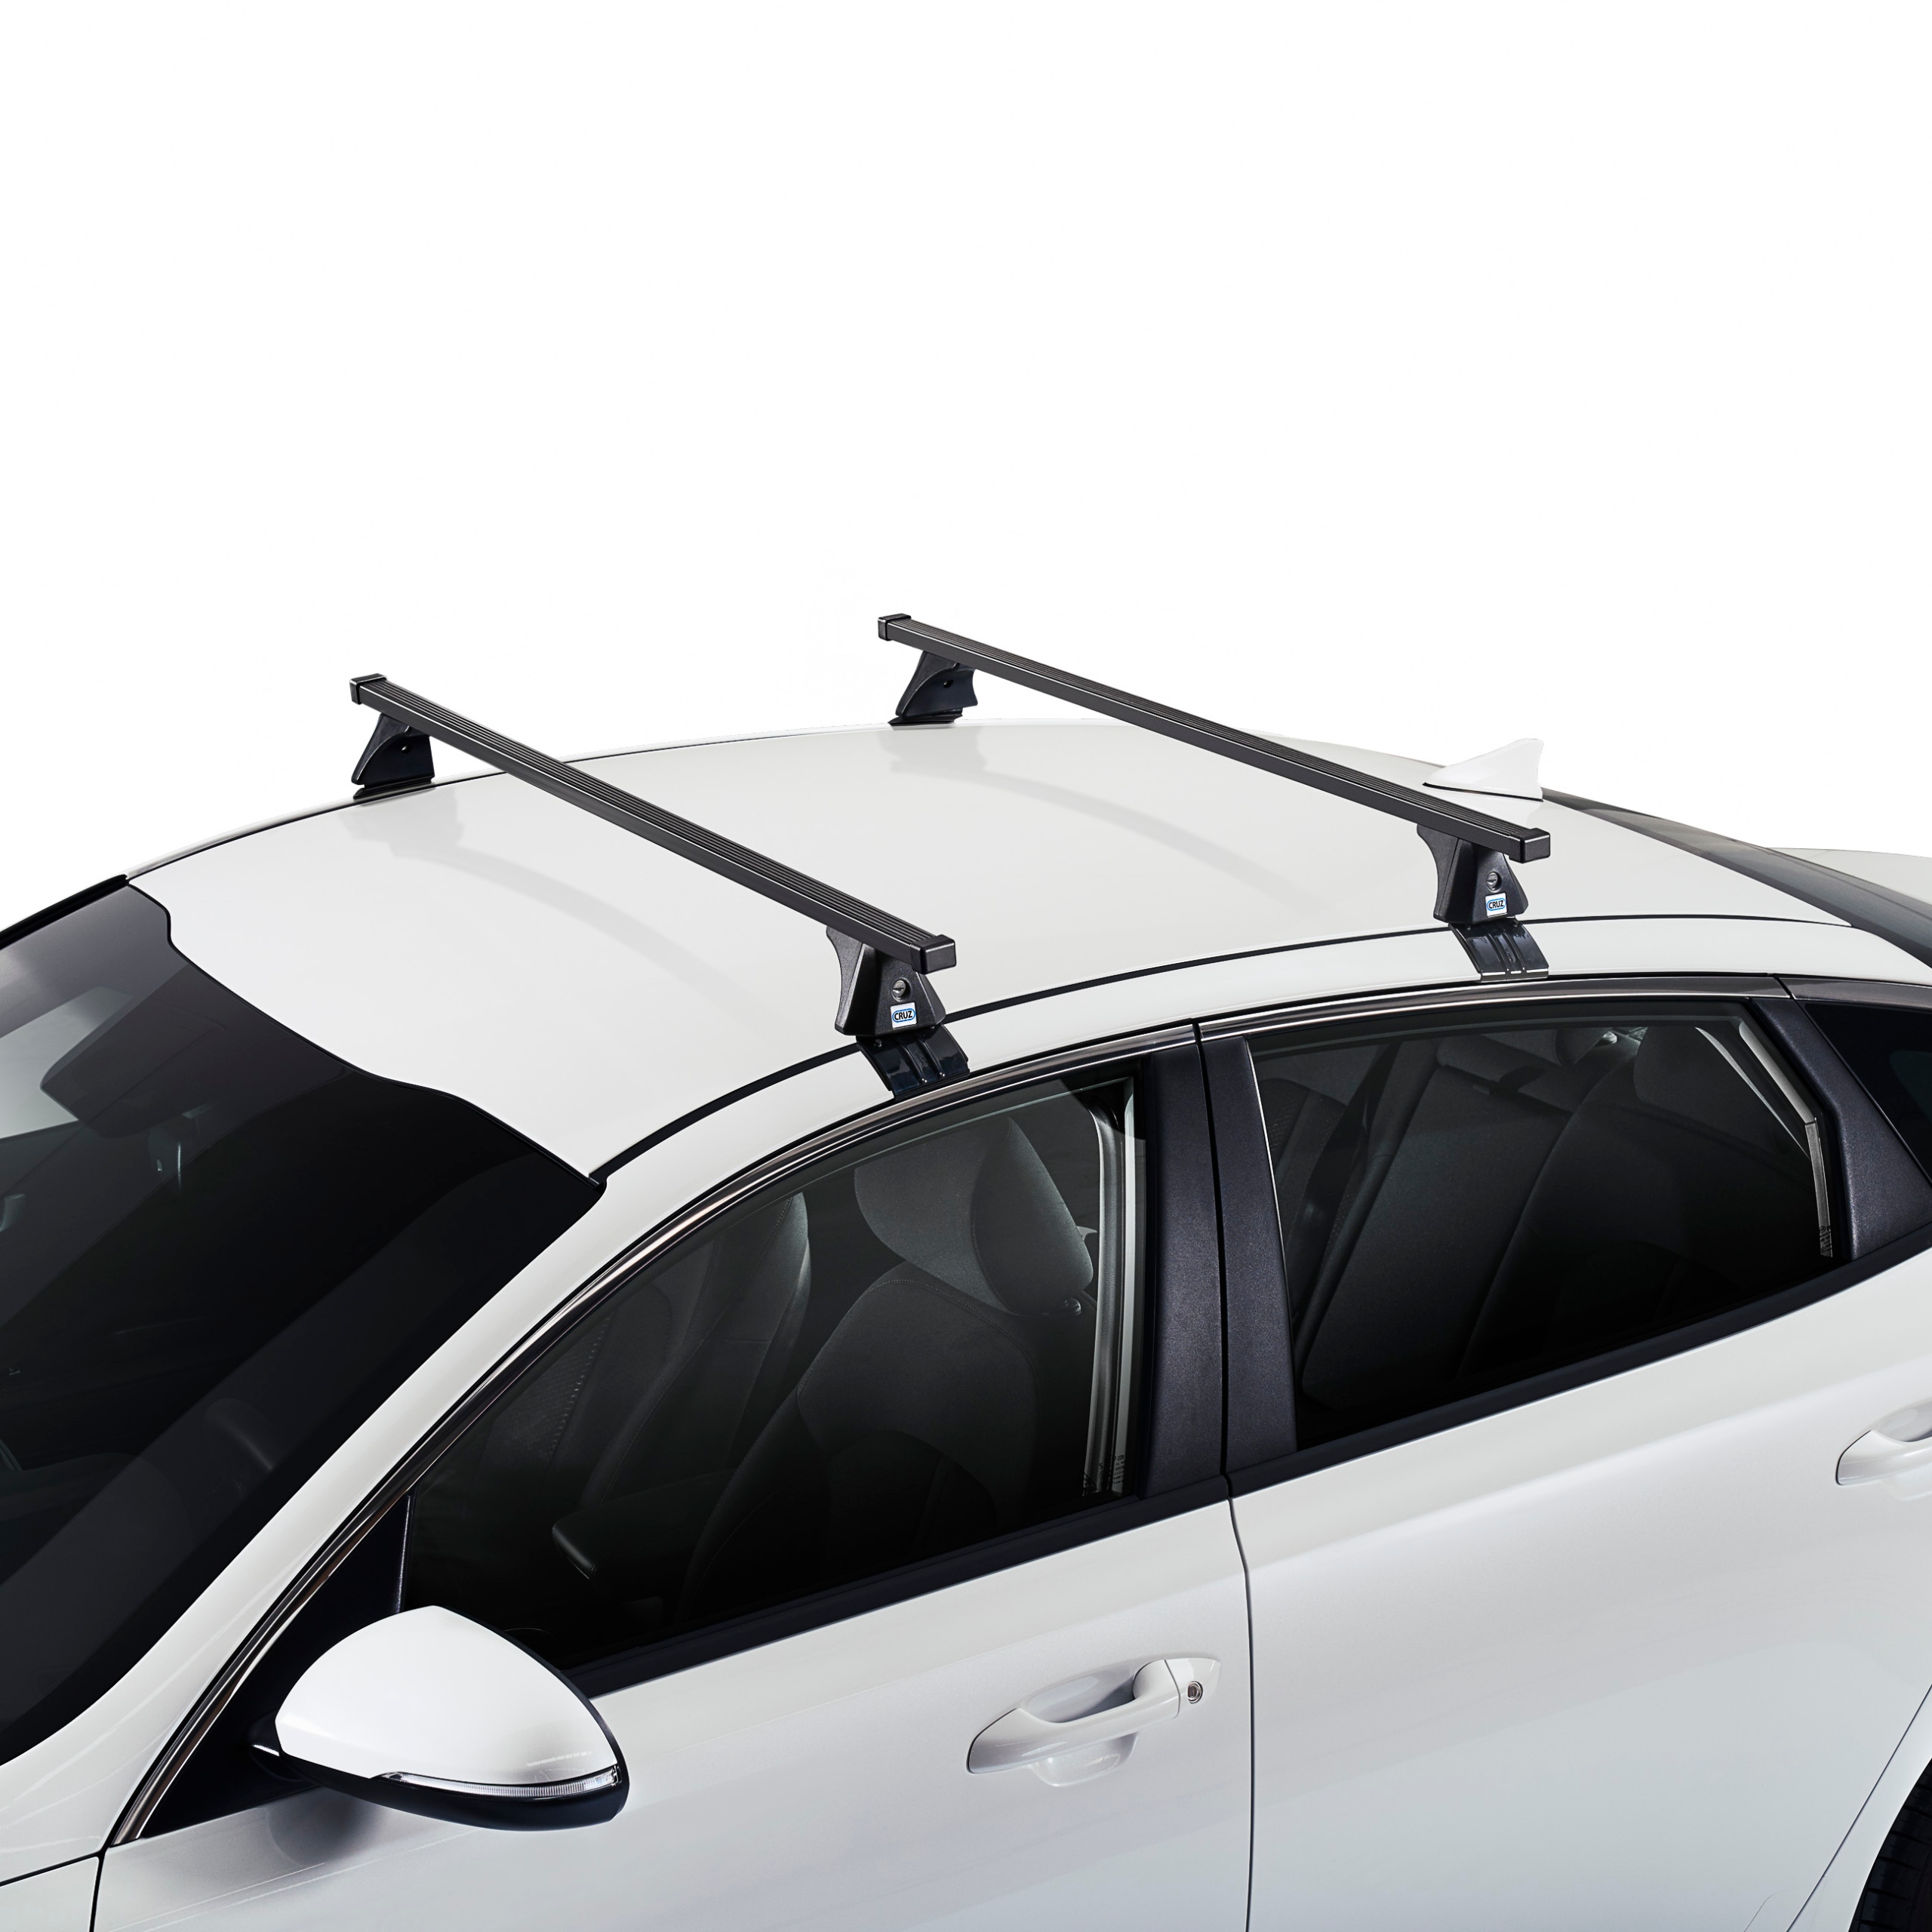 Багажник на крышу автомобиля можно. Багажник Lux стандарт на крышу Seat Ibiza (2002-2008), 1.1 м. Volvo 8524417002 багажник на крышу. Багажник на крышу Форд фокус 2 Roof RAFK. Fiat 500 багажник на крышу.